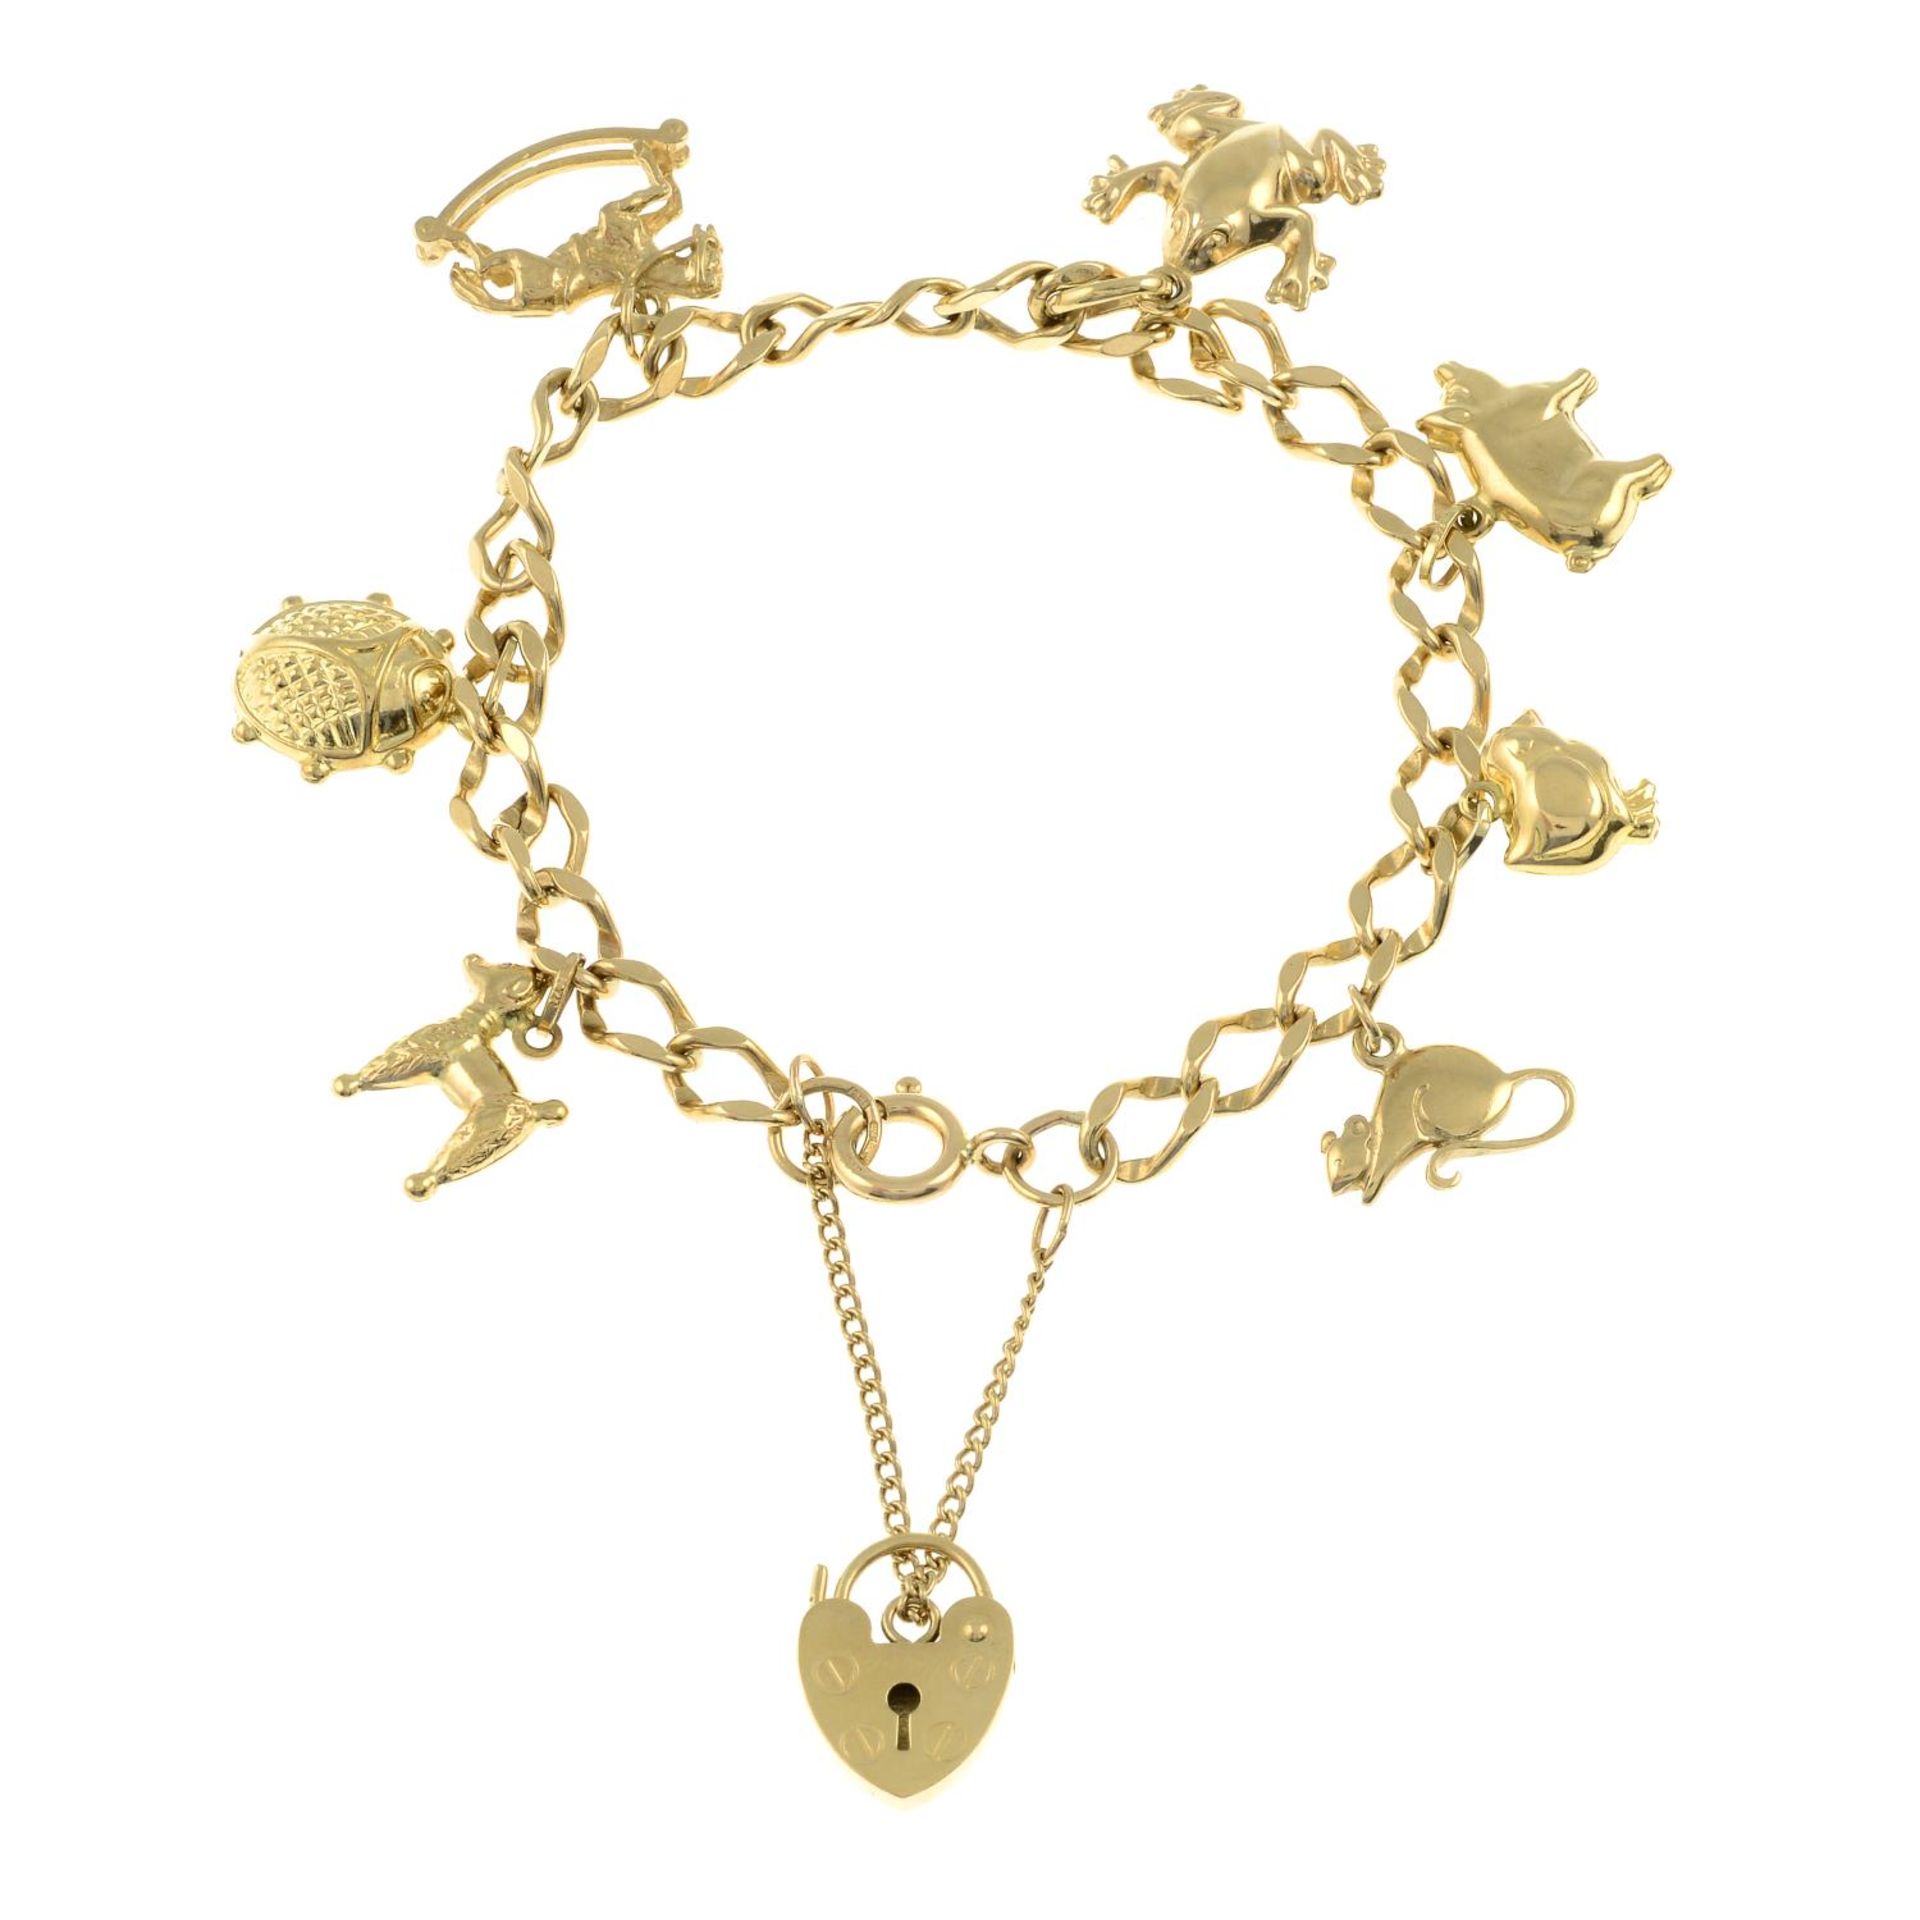 A 9ct gold charm bracelet.Hallmarks for Sheffield.Length 19.4cms.